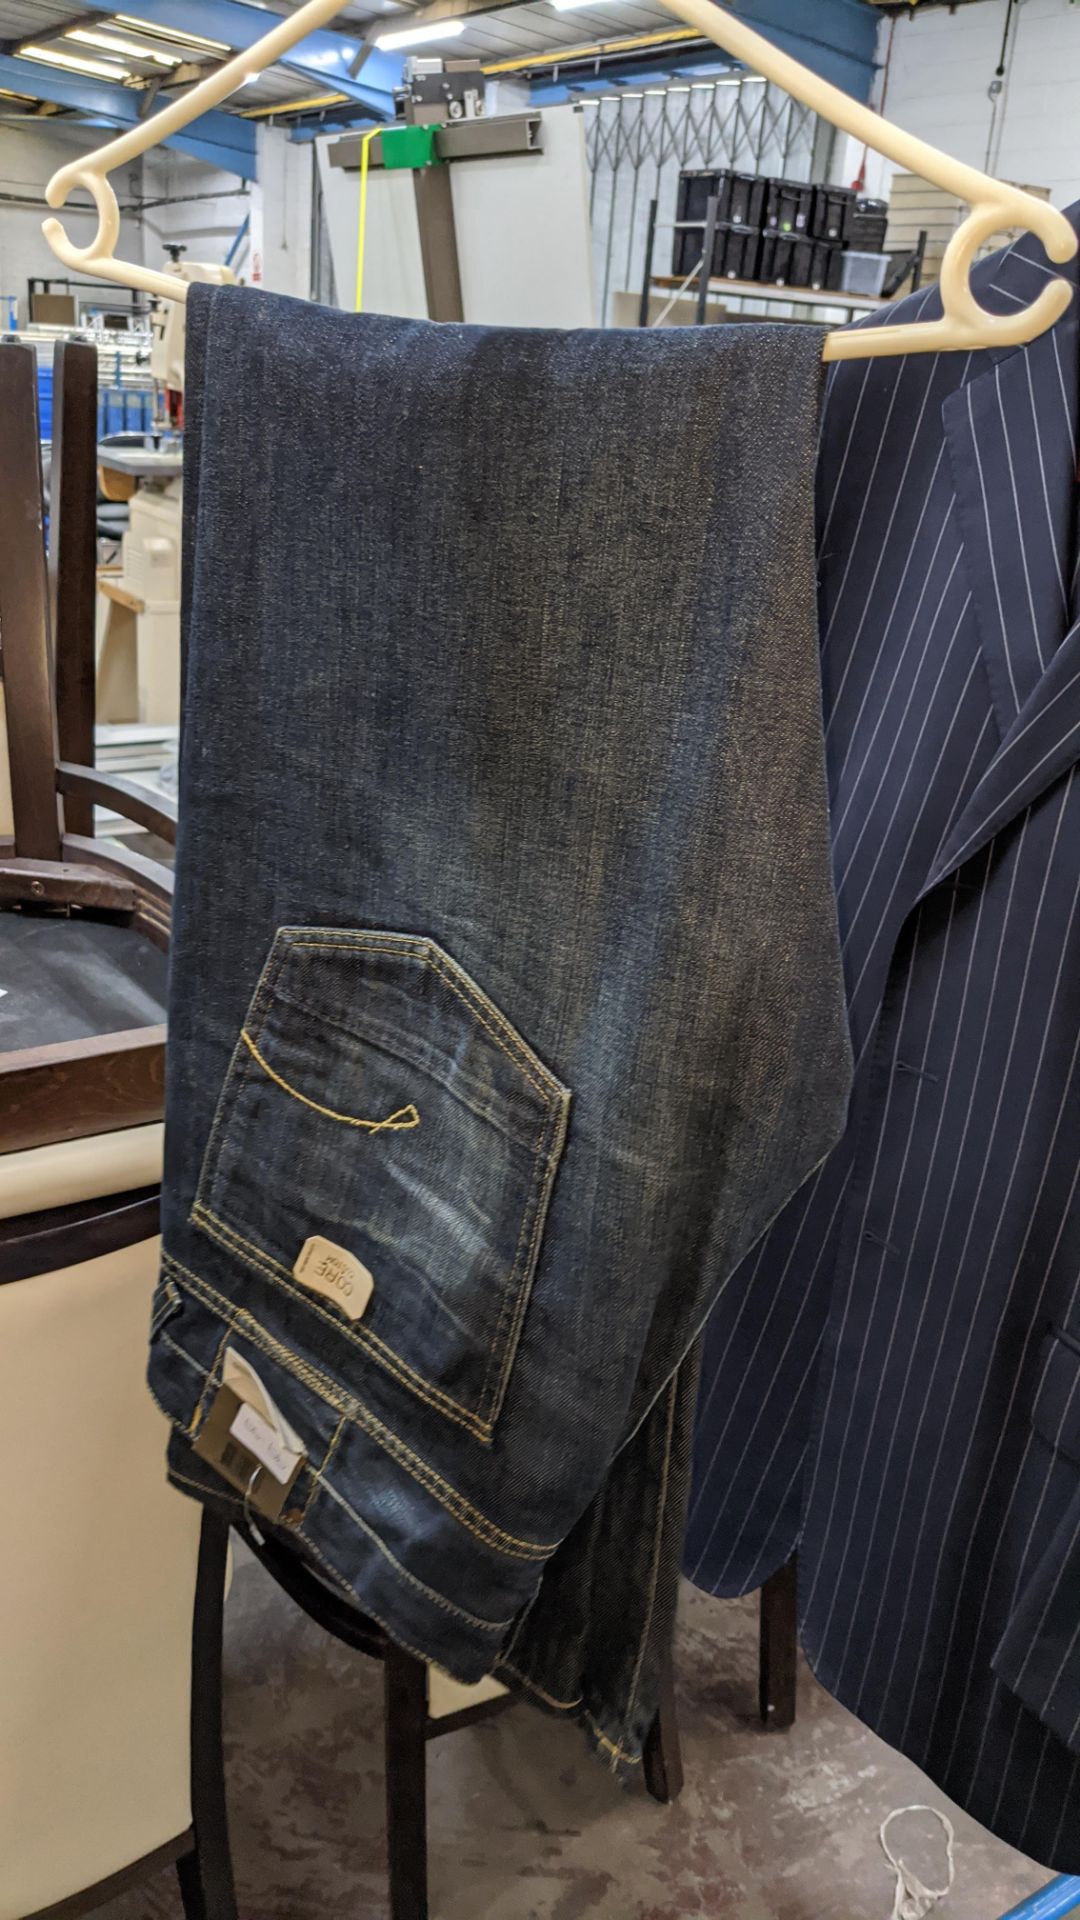 Pair of men's G-Star Raw jeans, Core custom range, waist 36", leg 34", still with original tags - Image 2 of 4